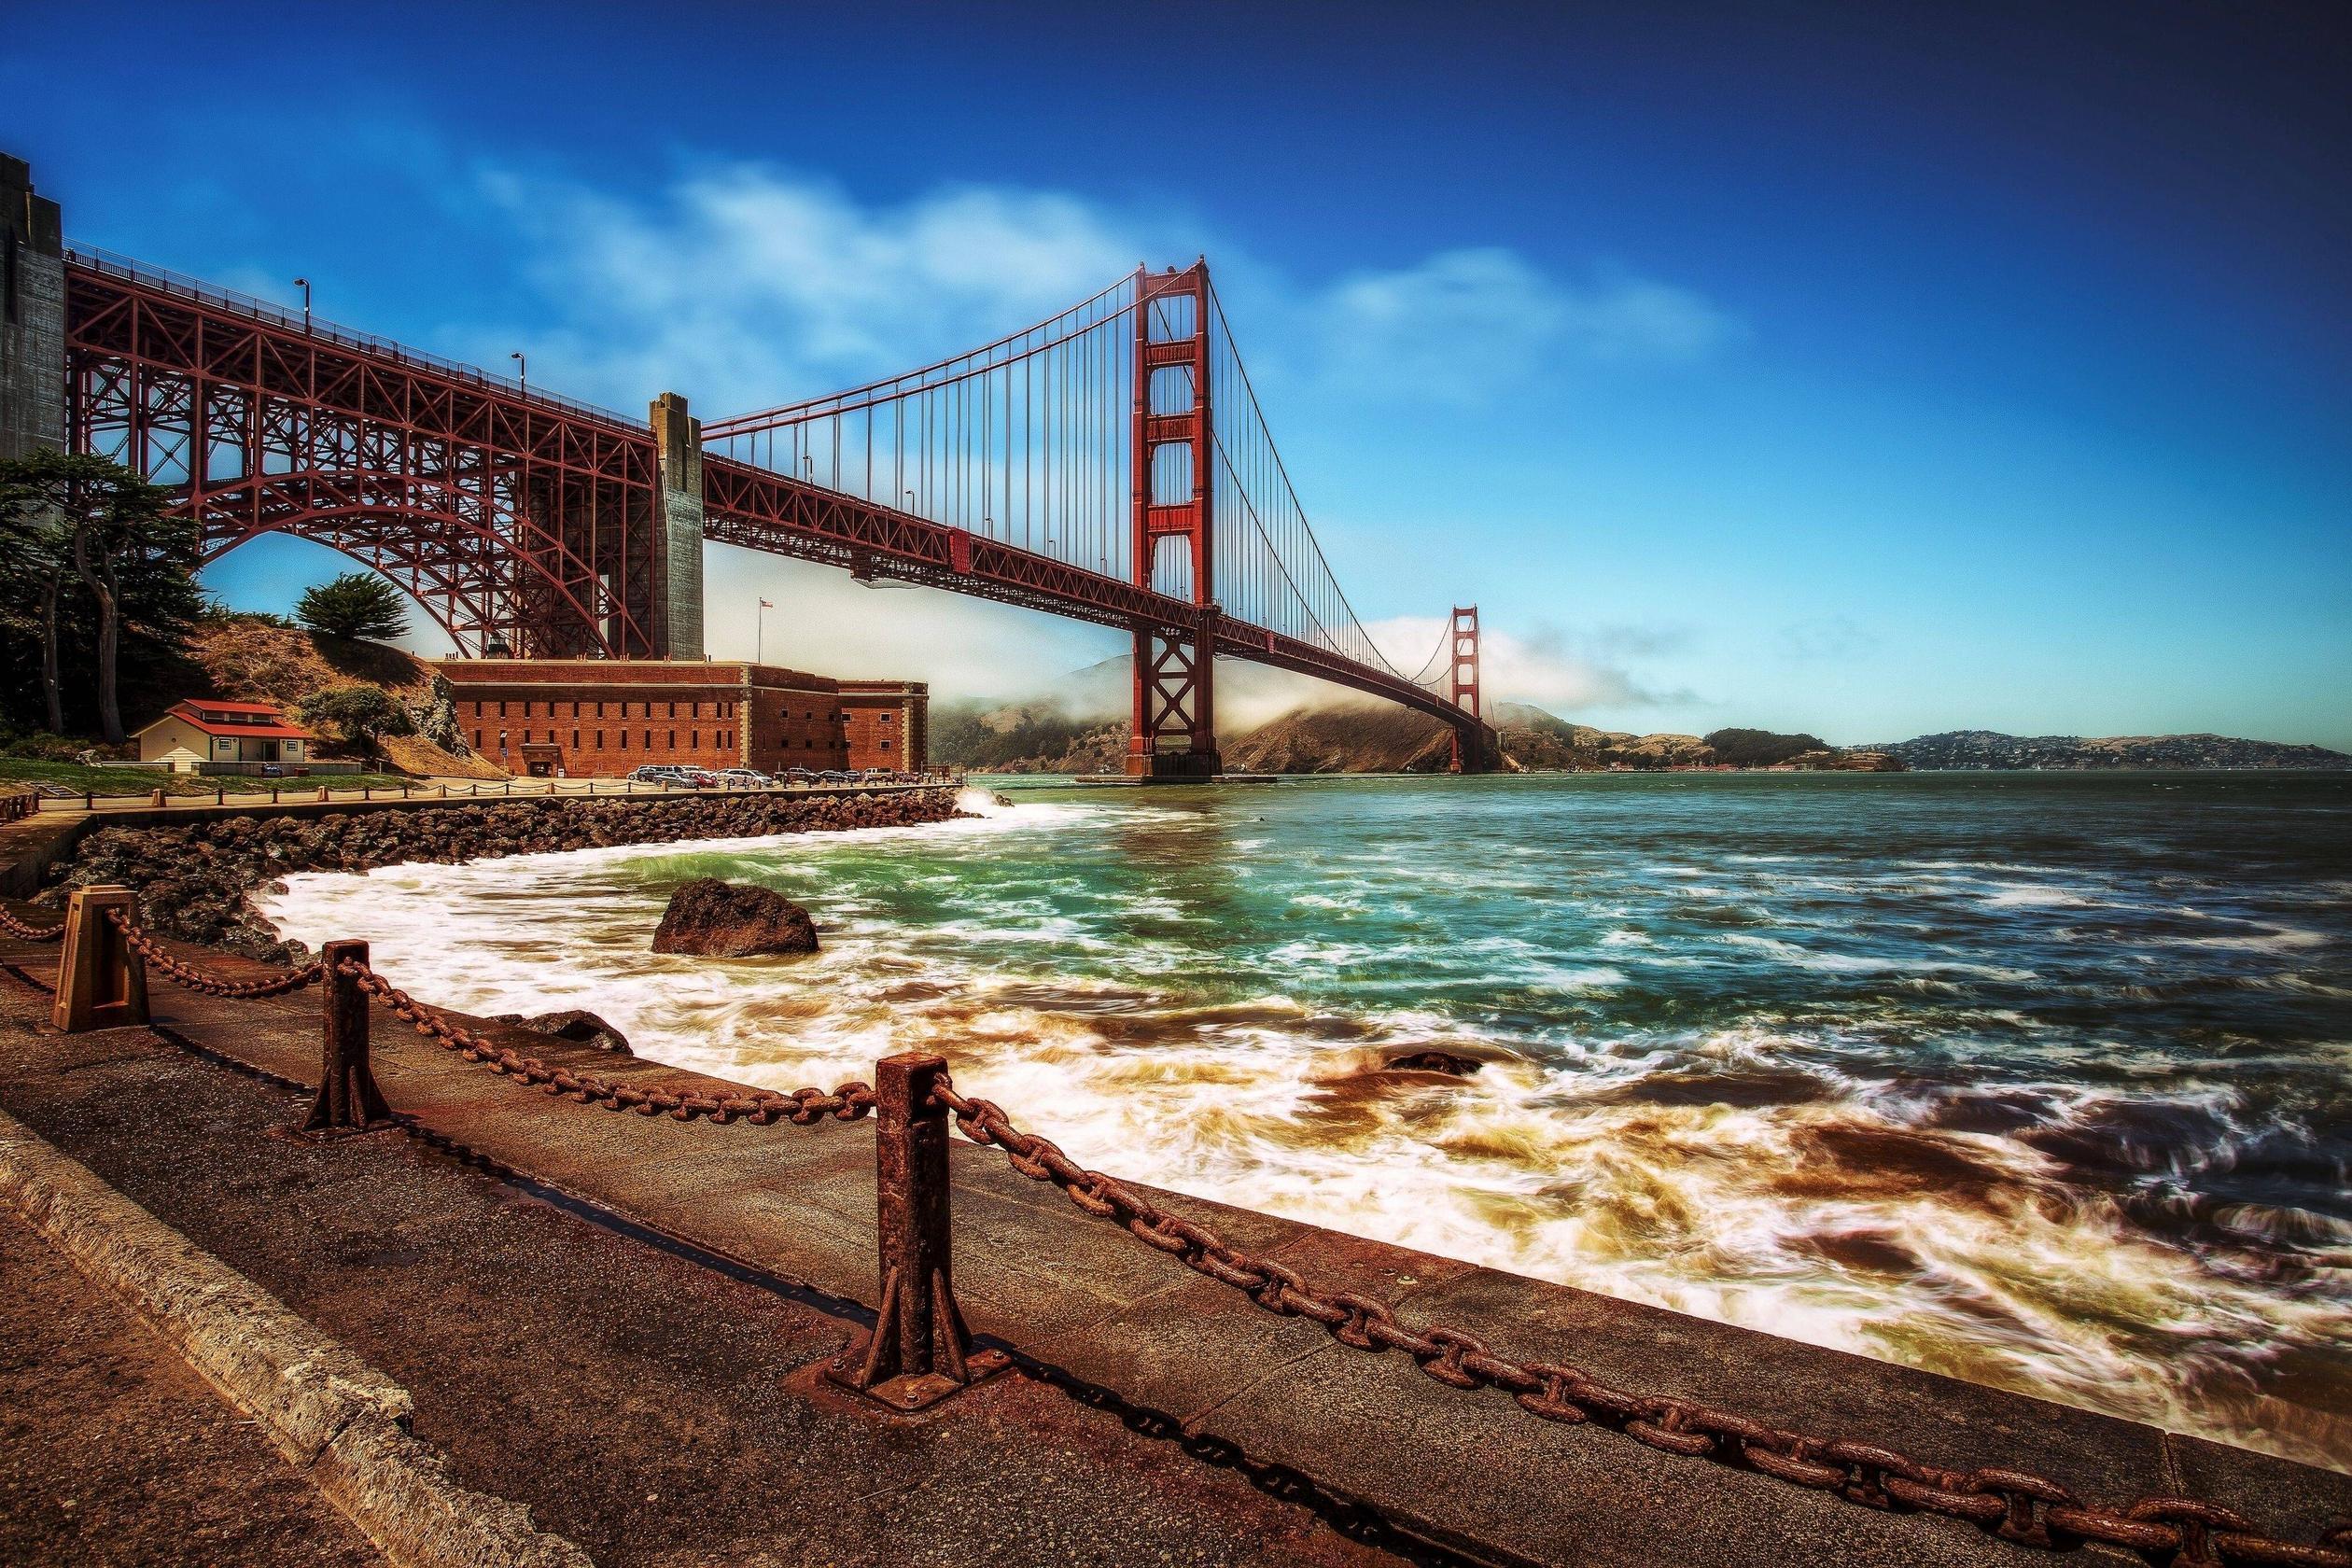 Wallpaper HD Golden Gate Bridge 1280 X 1024 247 Kb Jpeg. HD